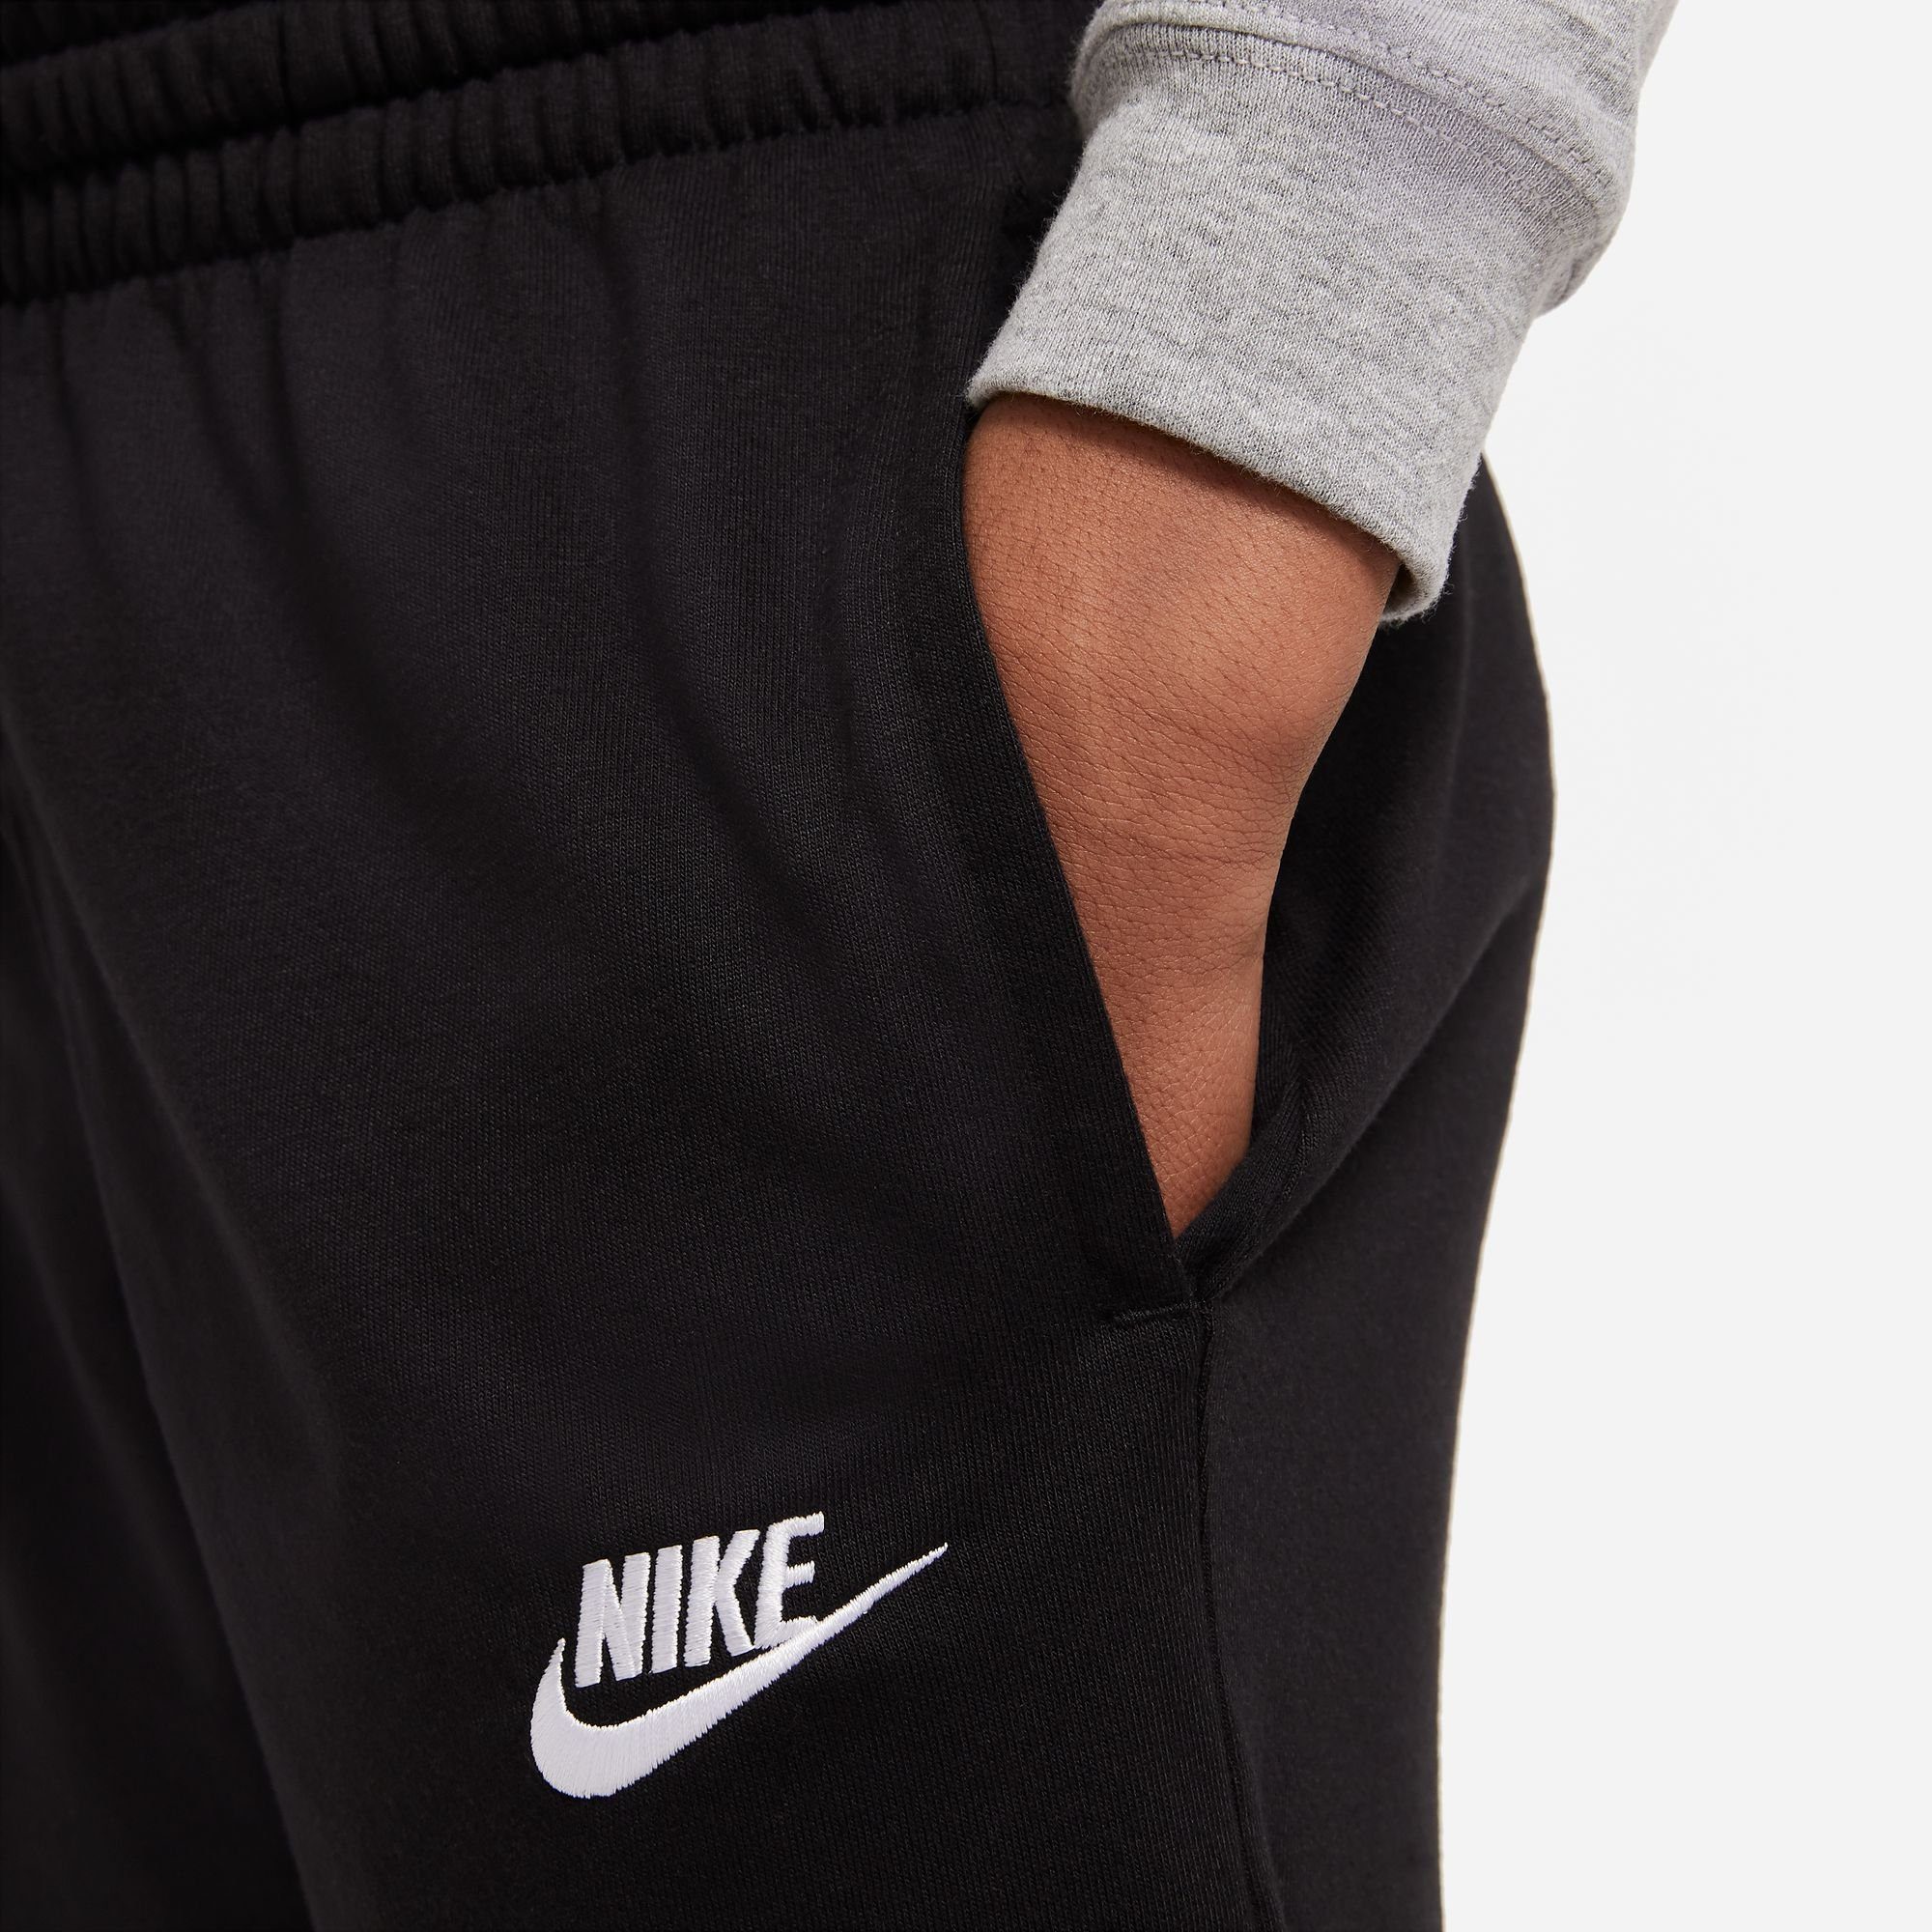 BIG Sportswear (BOYS) Shorts schwarz Nike SHORTS JERSEY KIDS'